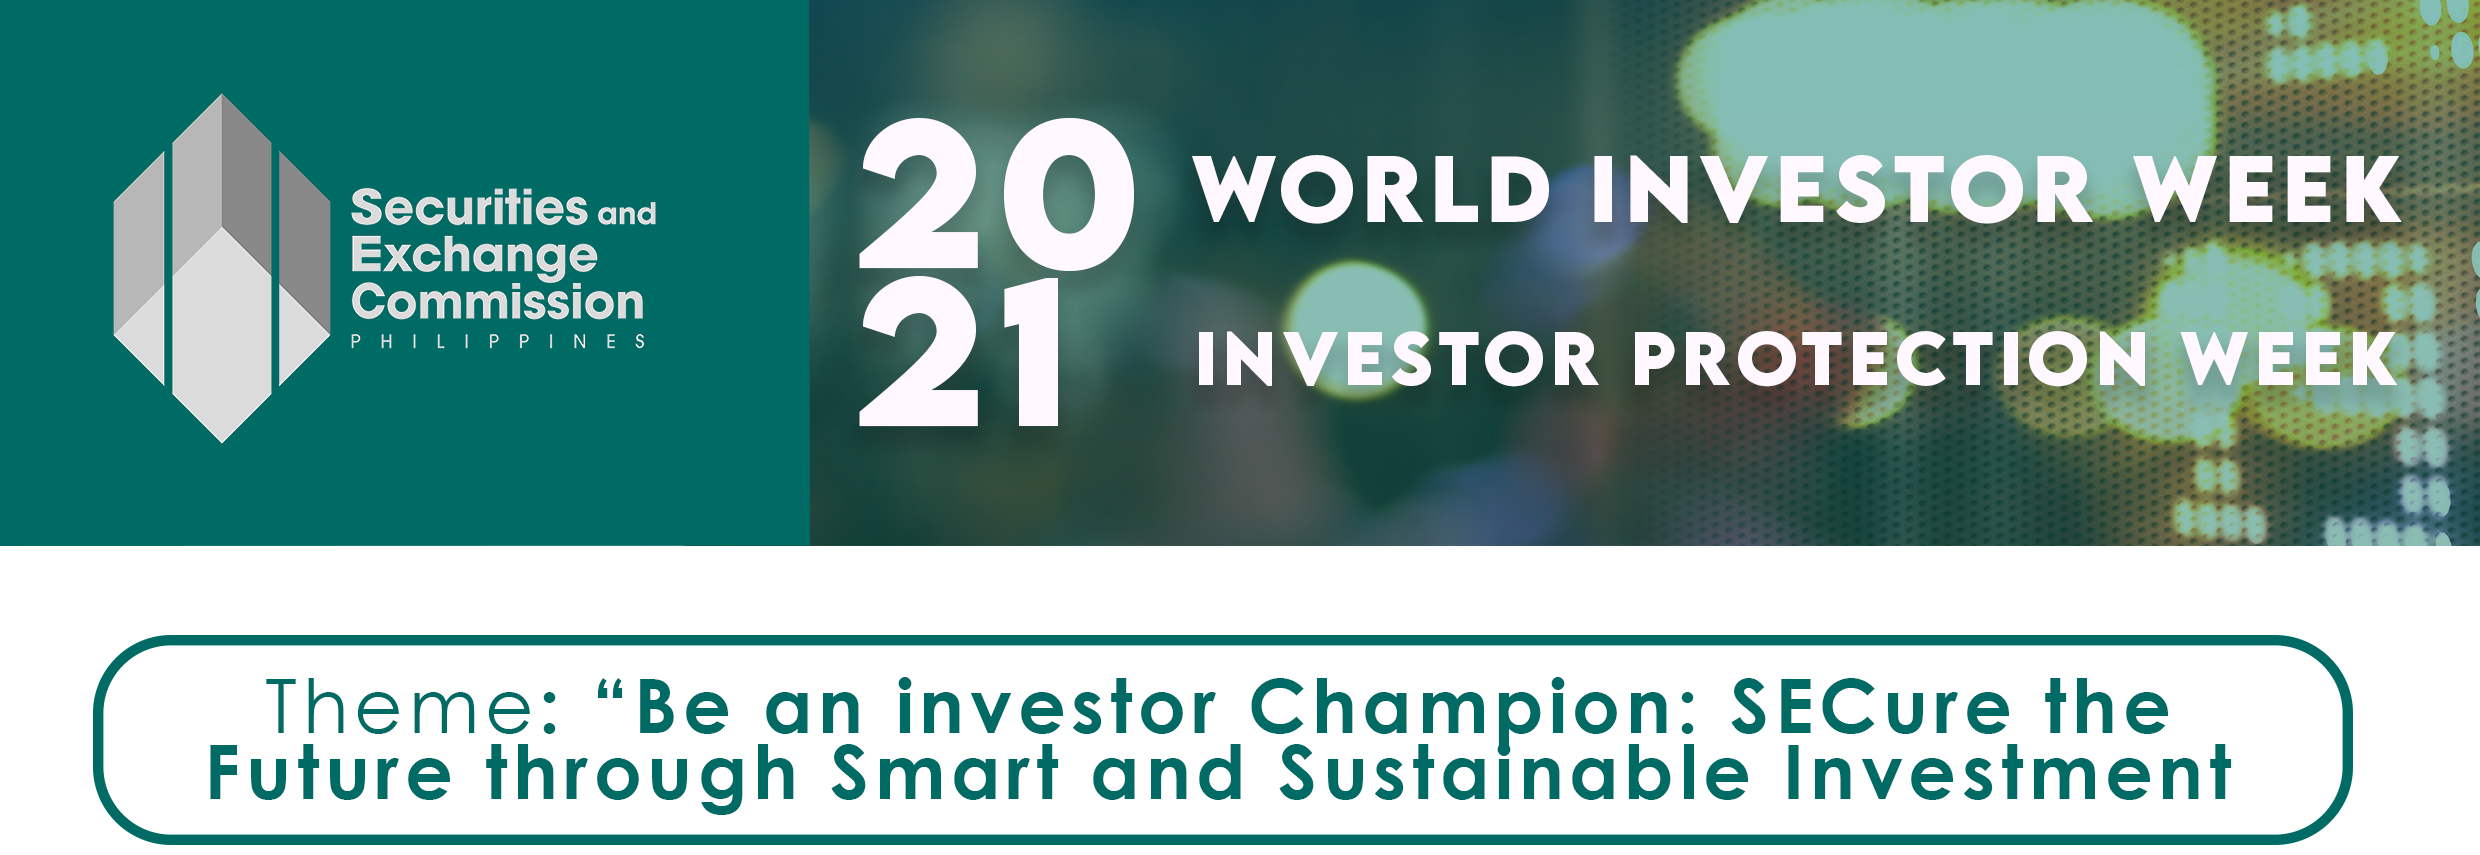 2021 World Investor Week